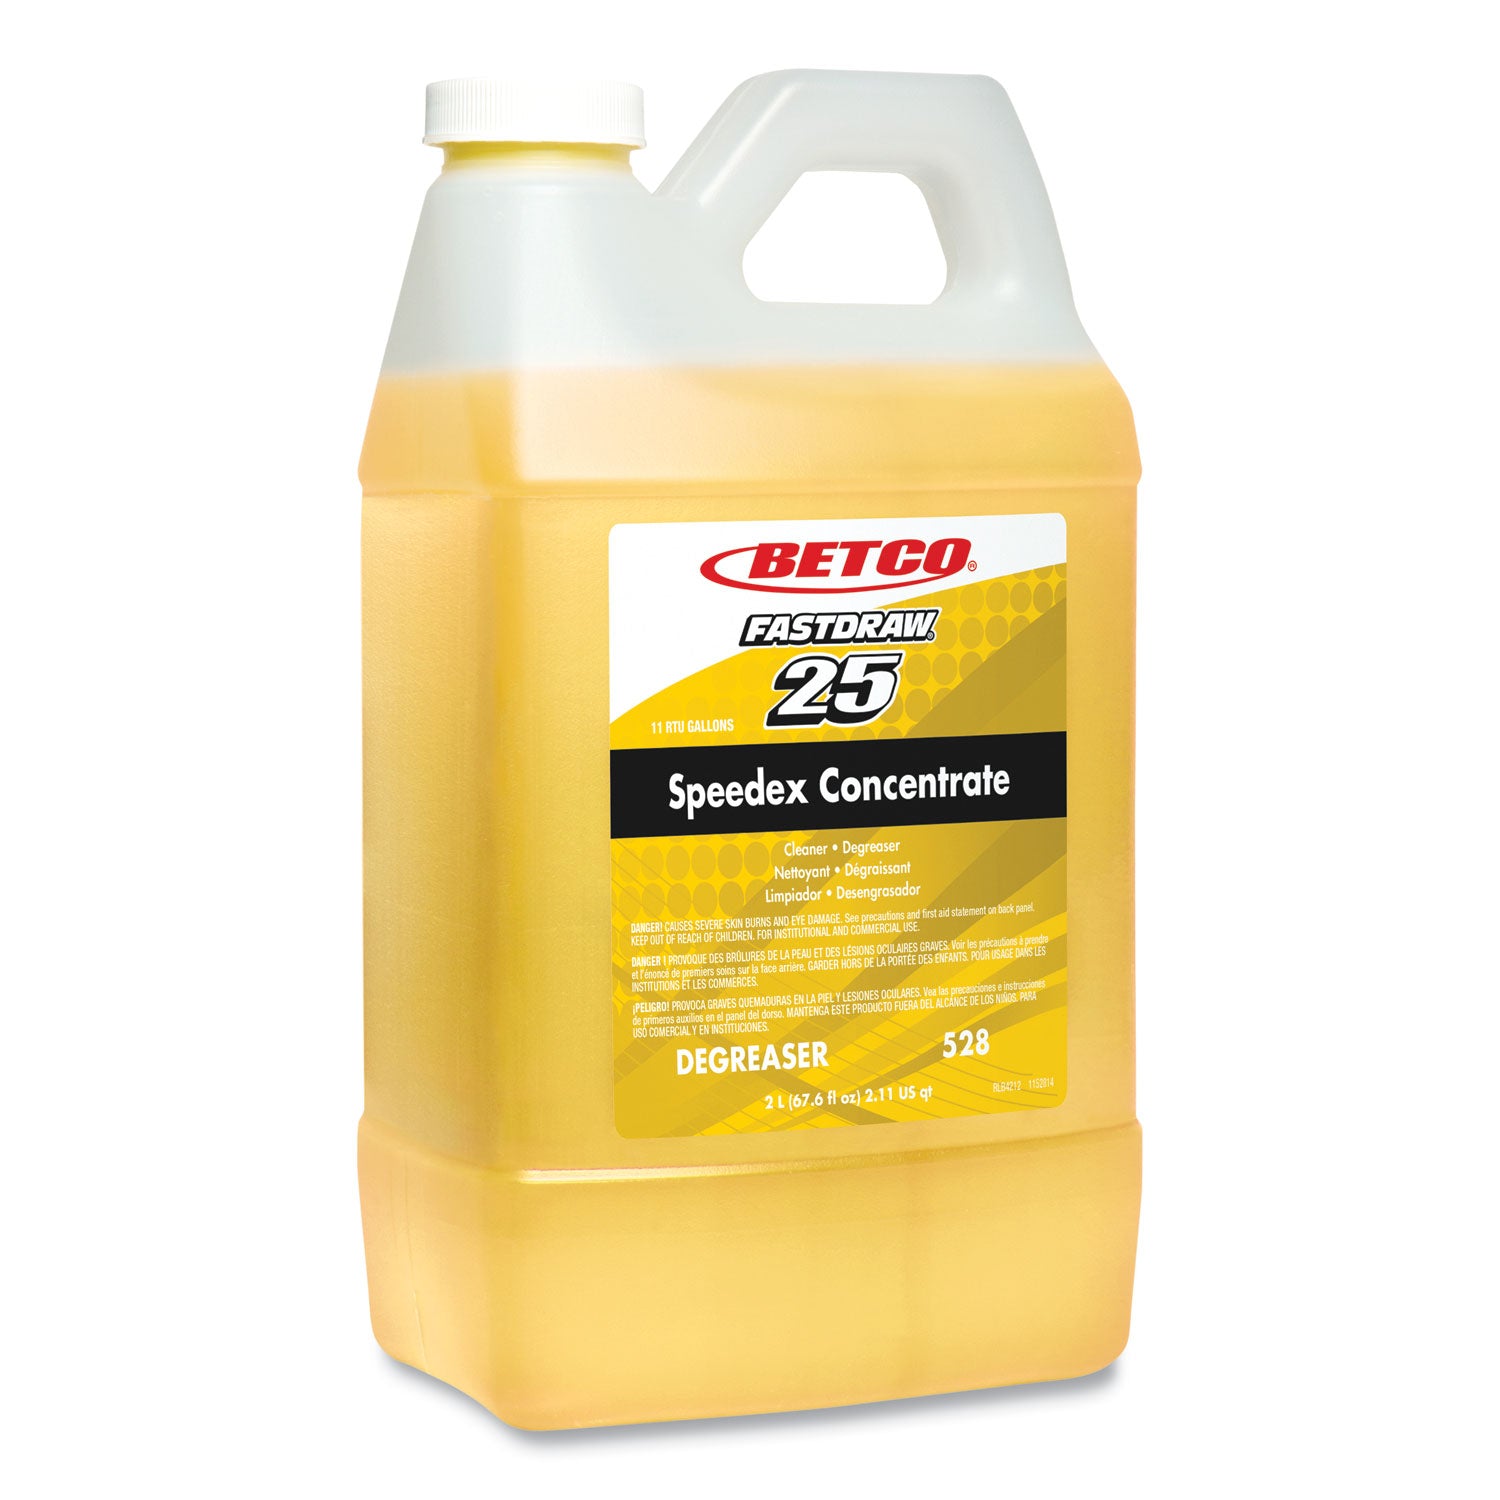 speedex-fastdraw-25-concentrate-heavy-duty-degreaser-lemon-scent-676-oz-bottle-4-carton_bet5284700 - 1